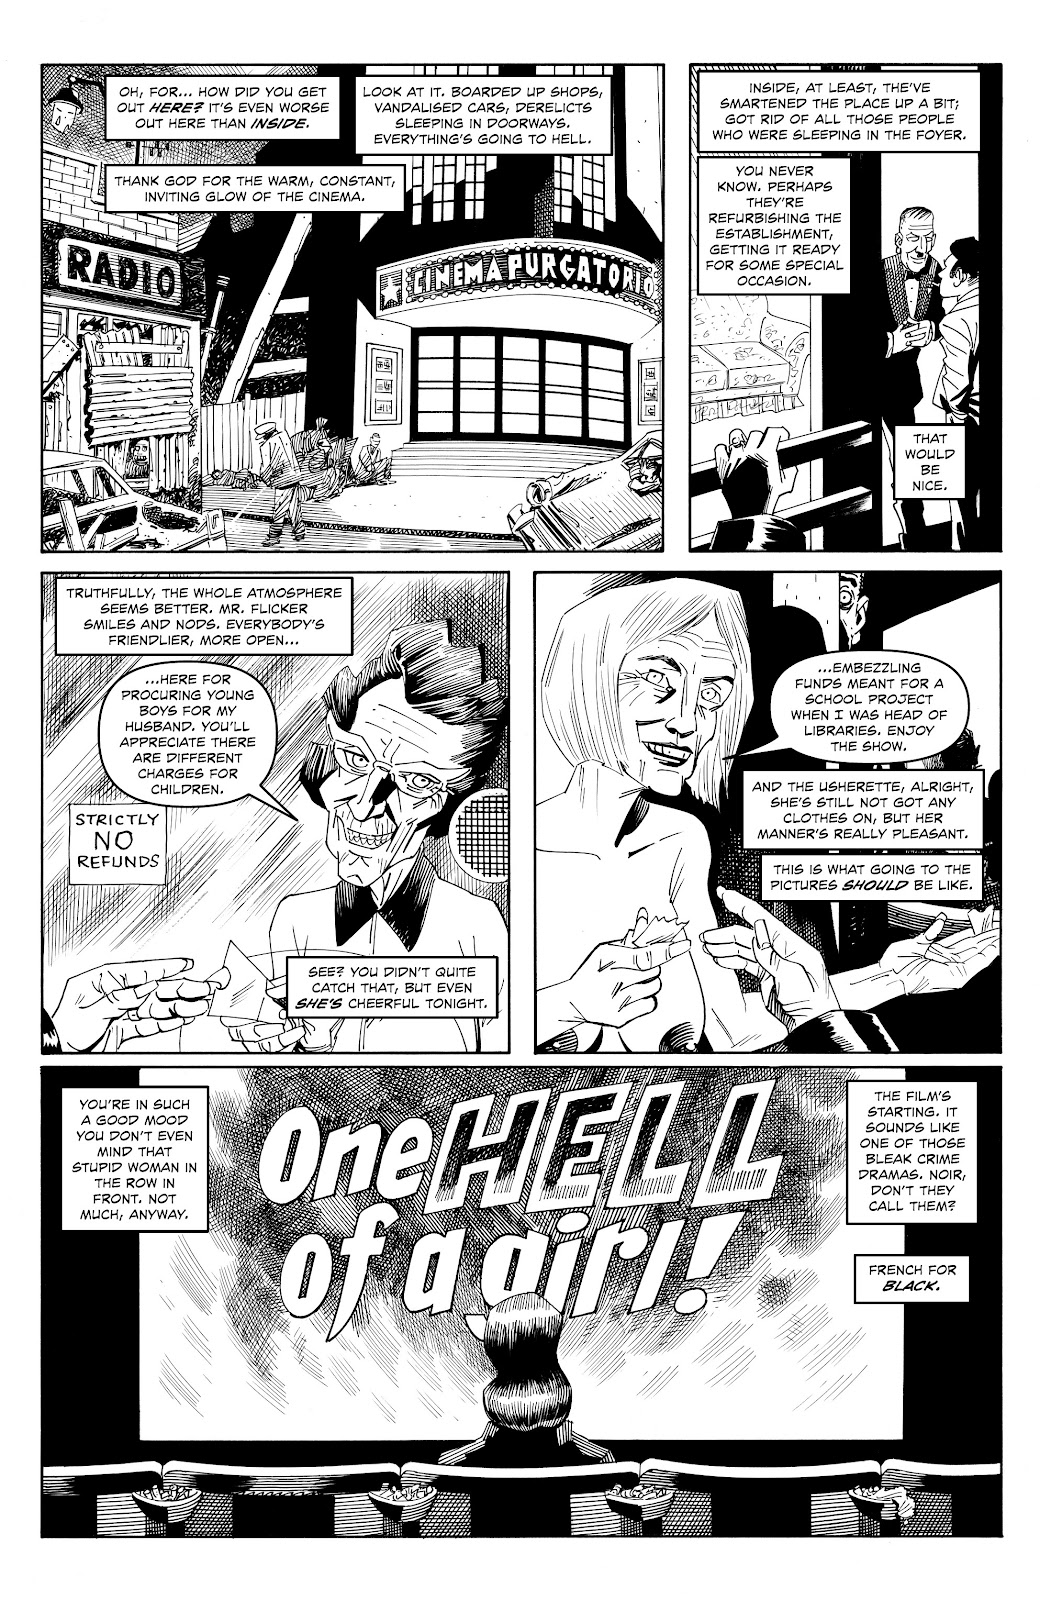 Read online Alan Moore's Cinema Purgatorio comic -  Issue #18 - 5